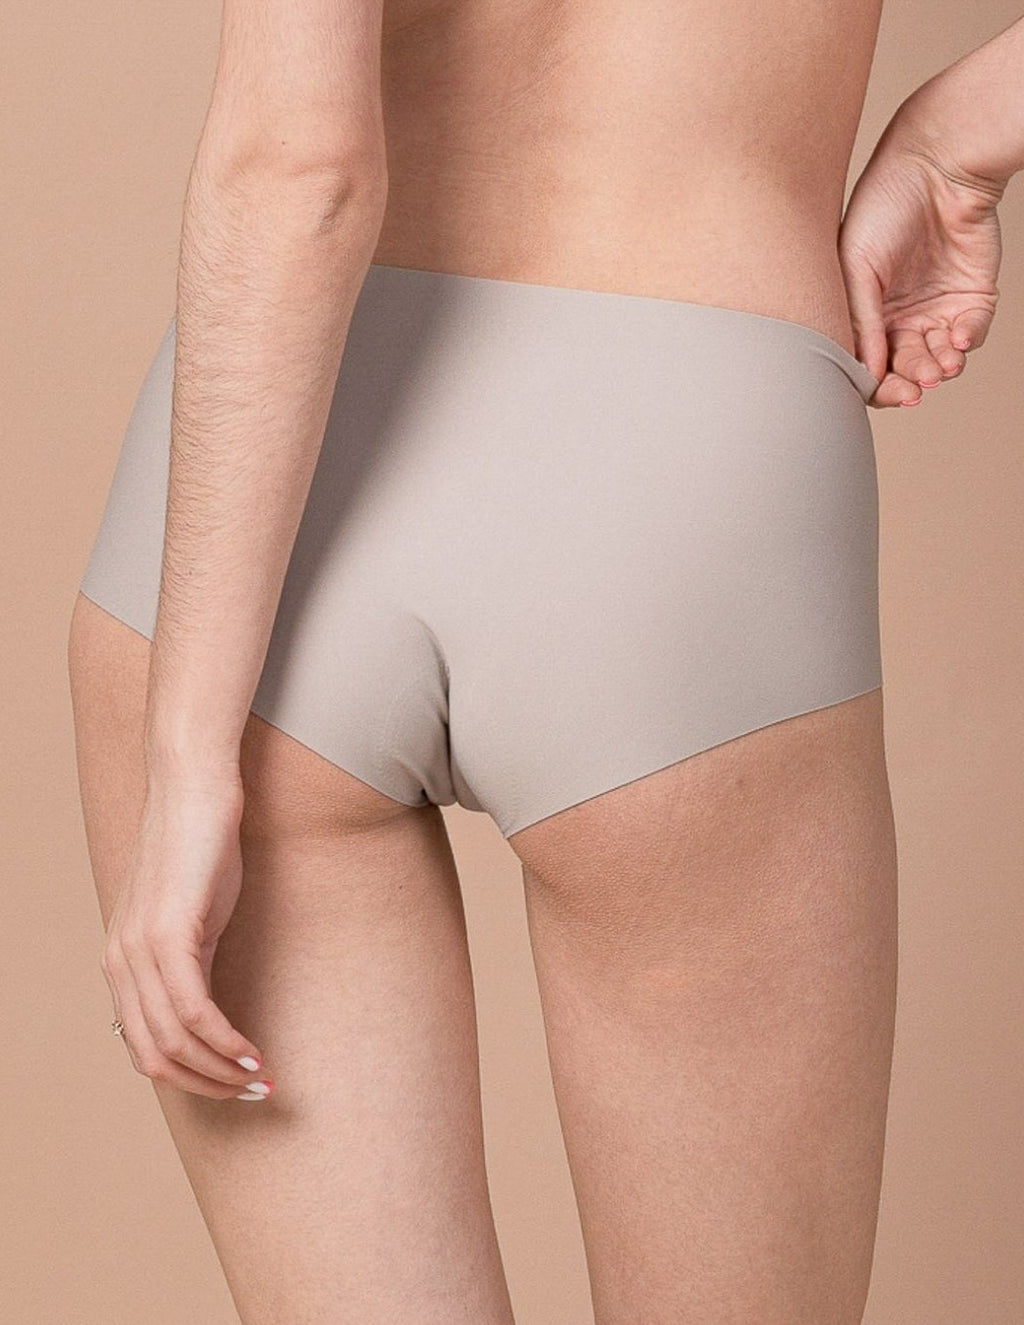 Boyshorts Skintone Match Silk 3-pack 100% Pure Silk Jersey Underwear Shorts  in 7 Nearly Nude Skin Tone Colors 